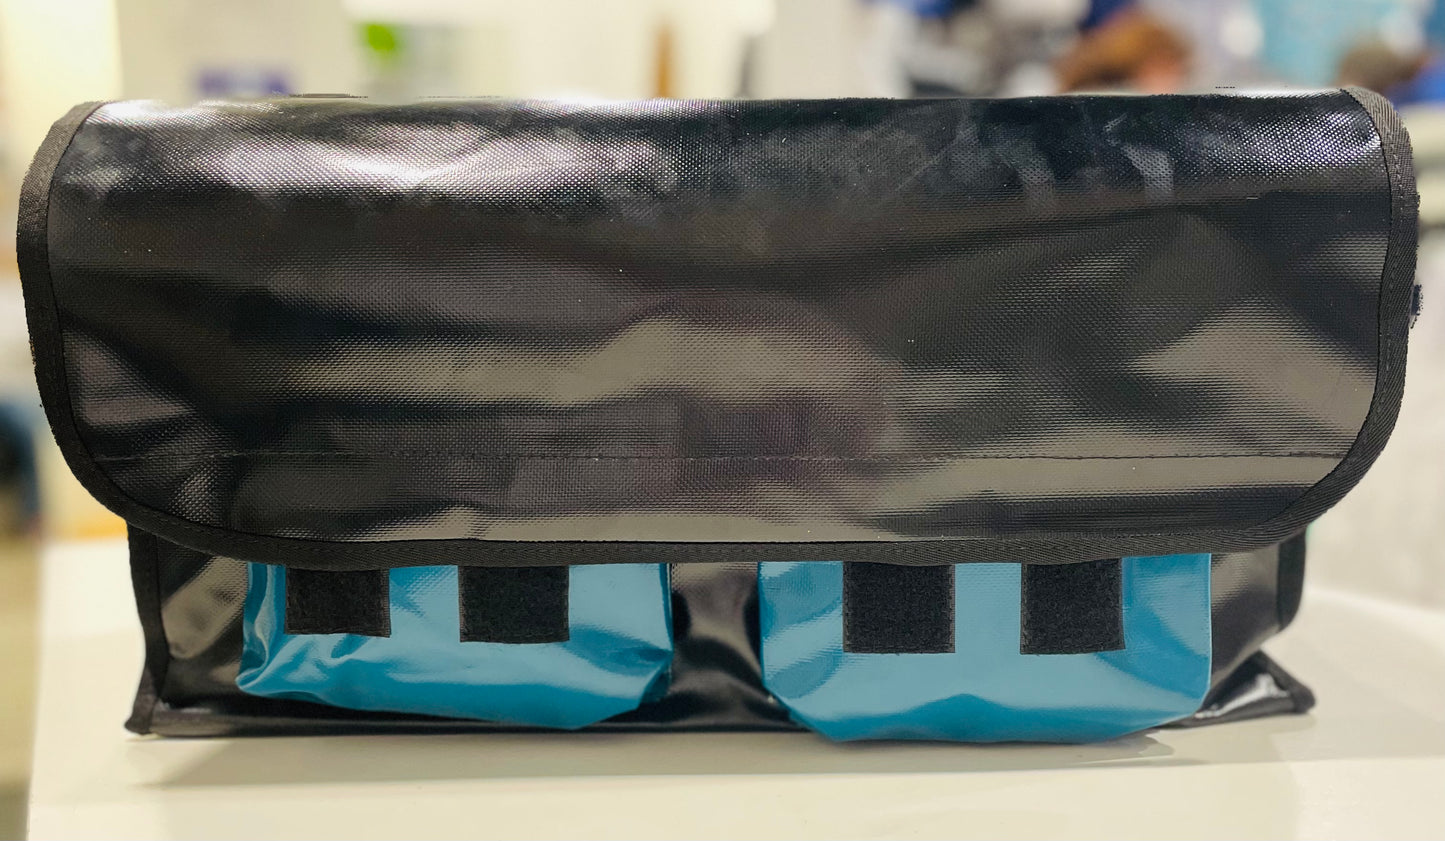 CribBags Medium Black and Teal Crib bag. Tough Vinyl Construct 2 pockets outside, Document pockets inside